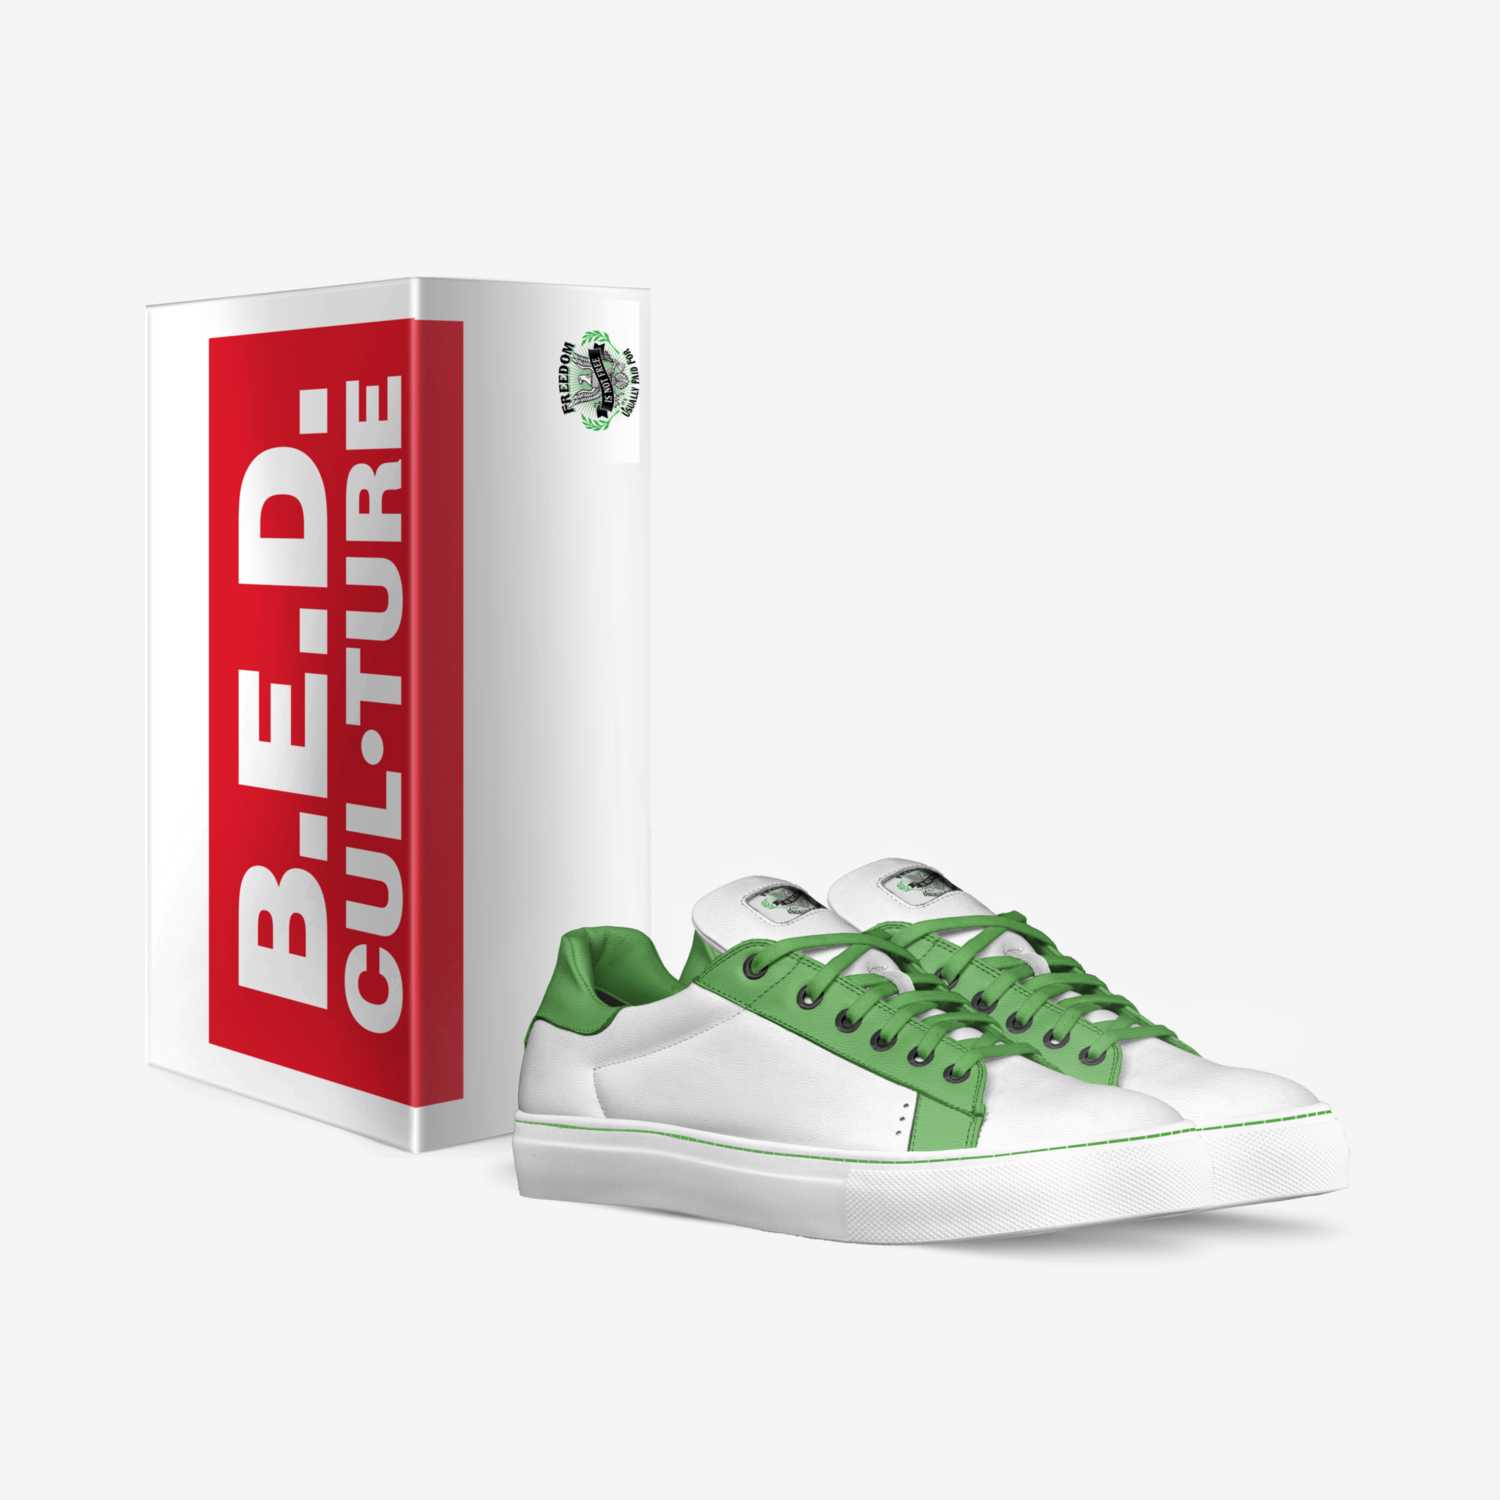 B.E.D. Cul*ture. custom made in Italy shoes by Bernard Manier | Box view